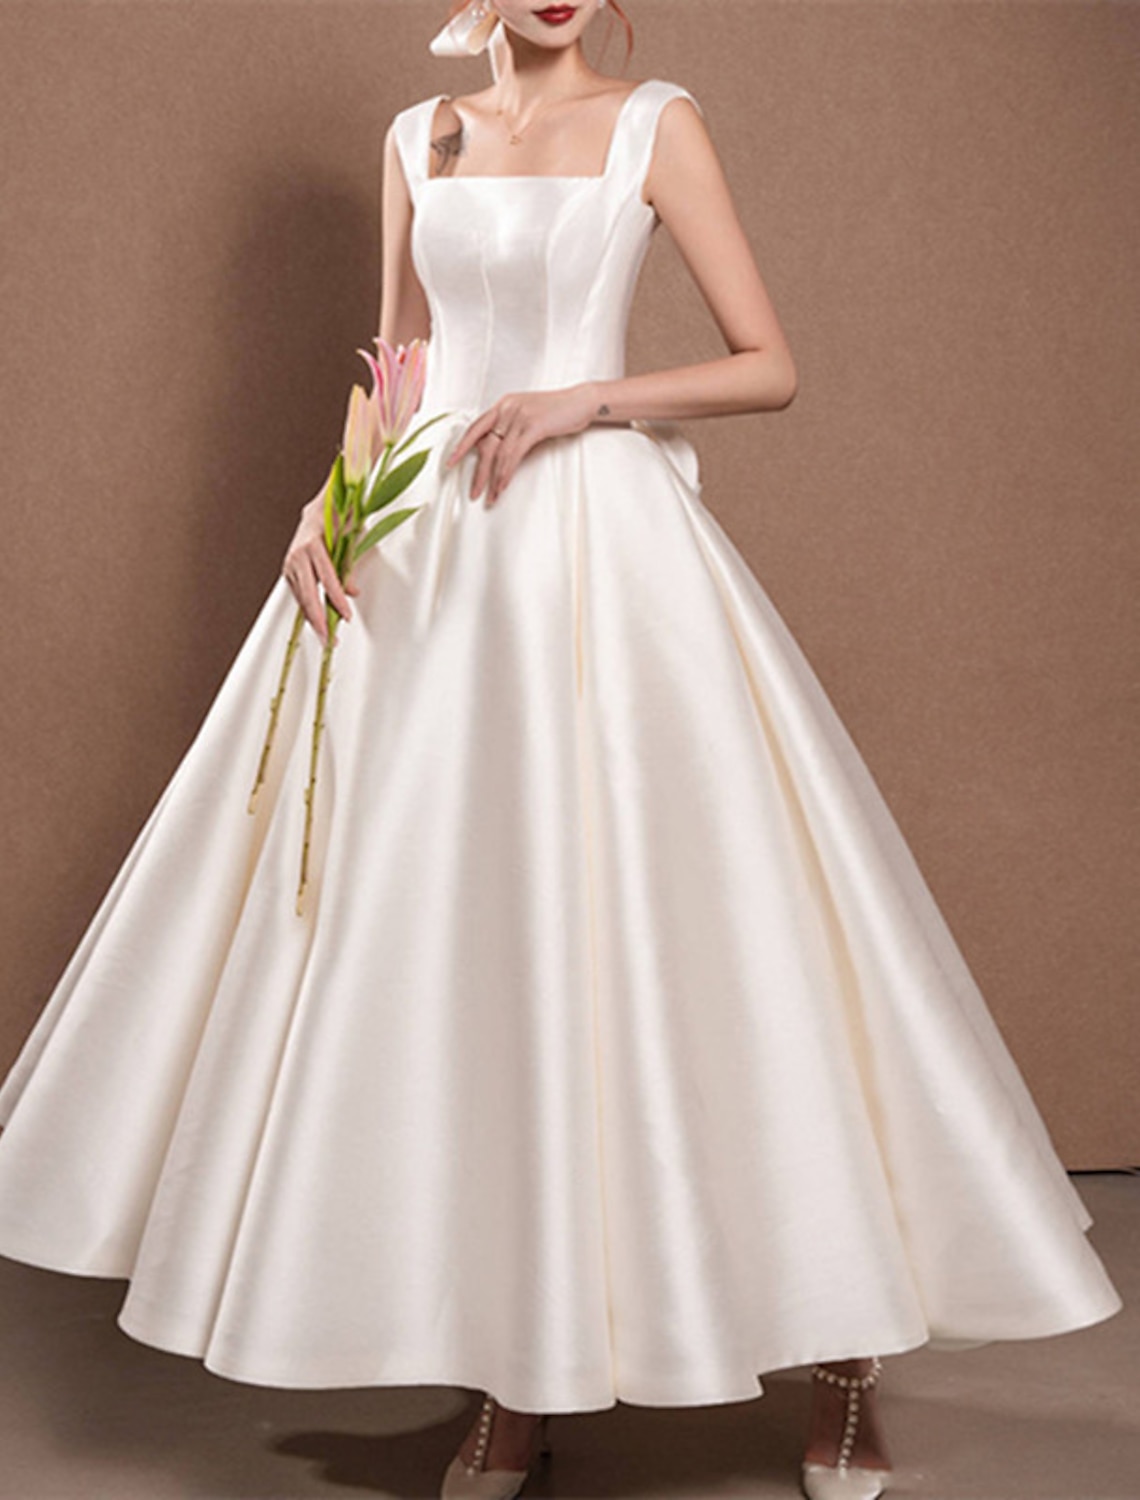 Elegant Short Satin Square Neck Ivory Wedding Dresses With Pockets A-Line Ankle Length Zipper Back Bridal Gowns for Women